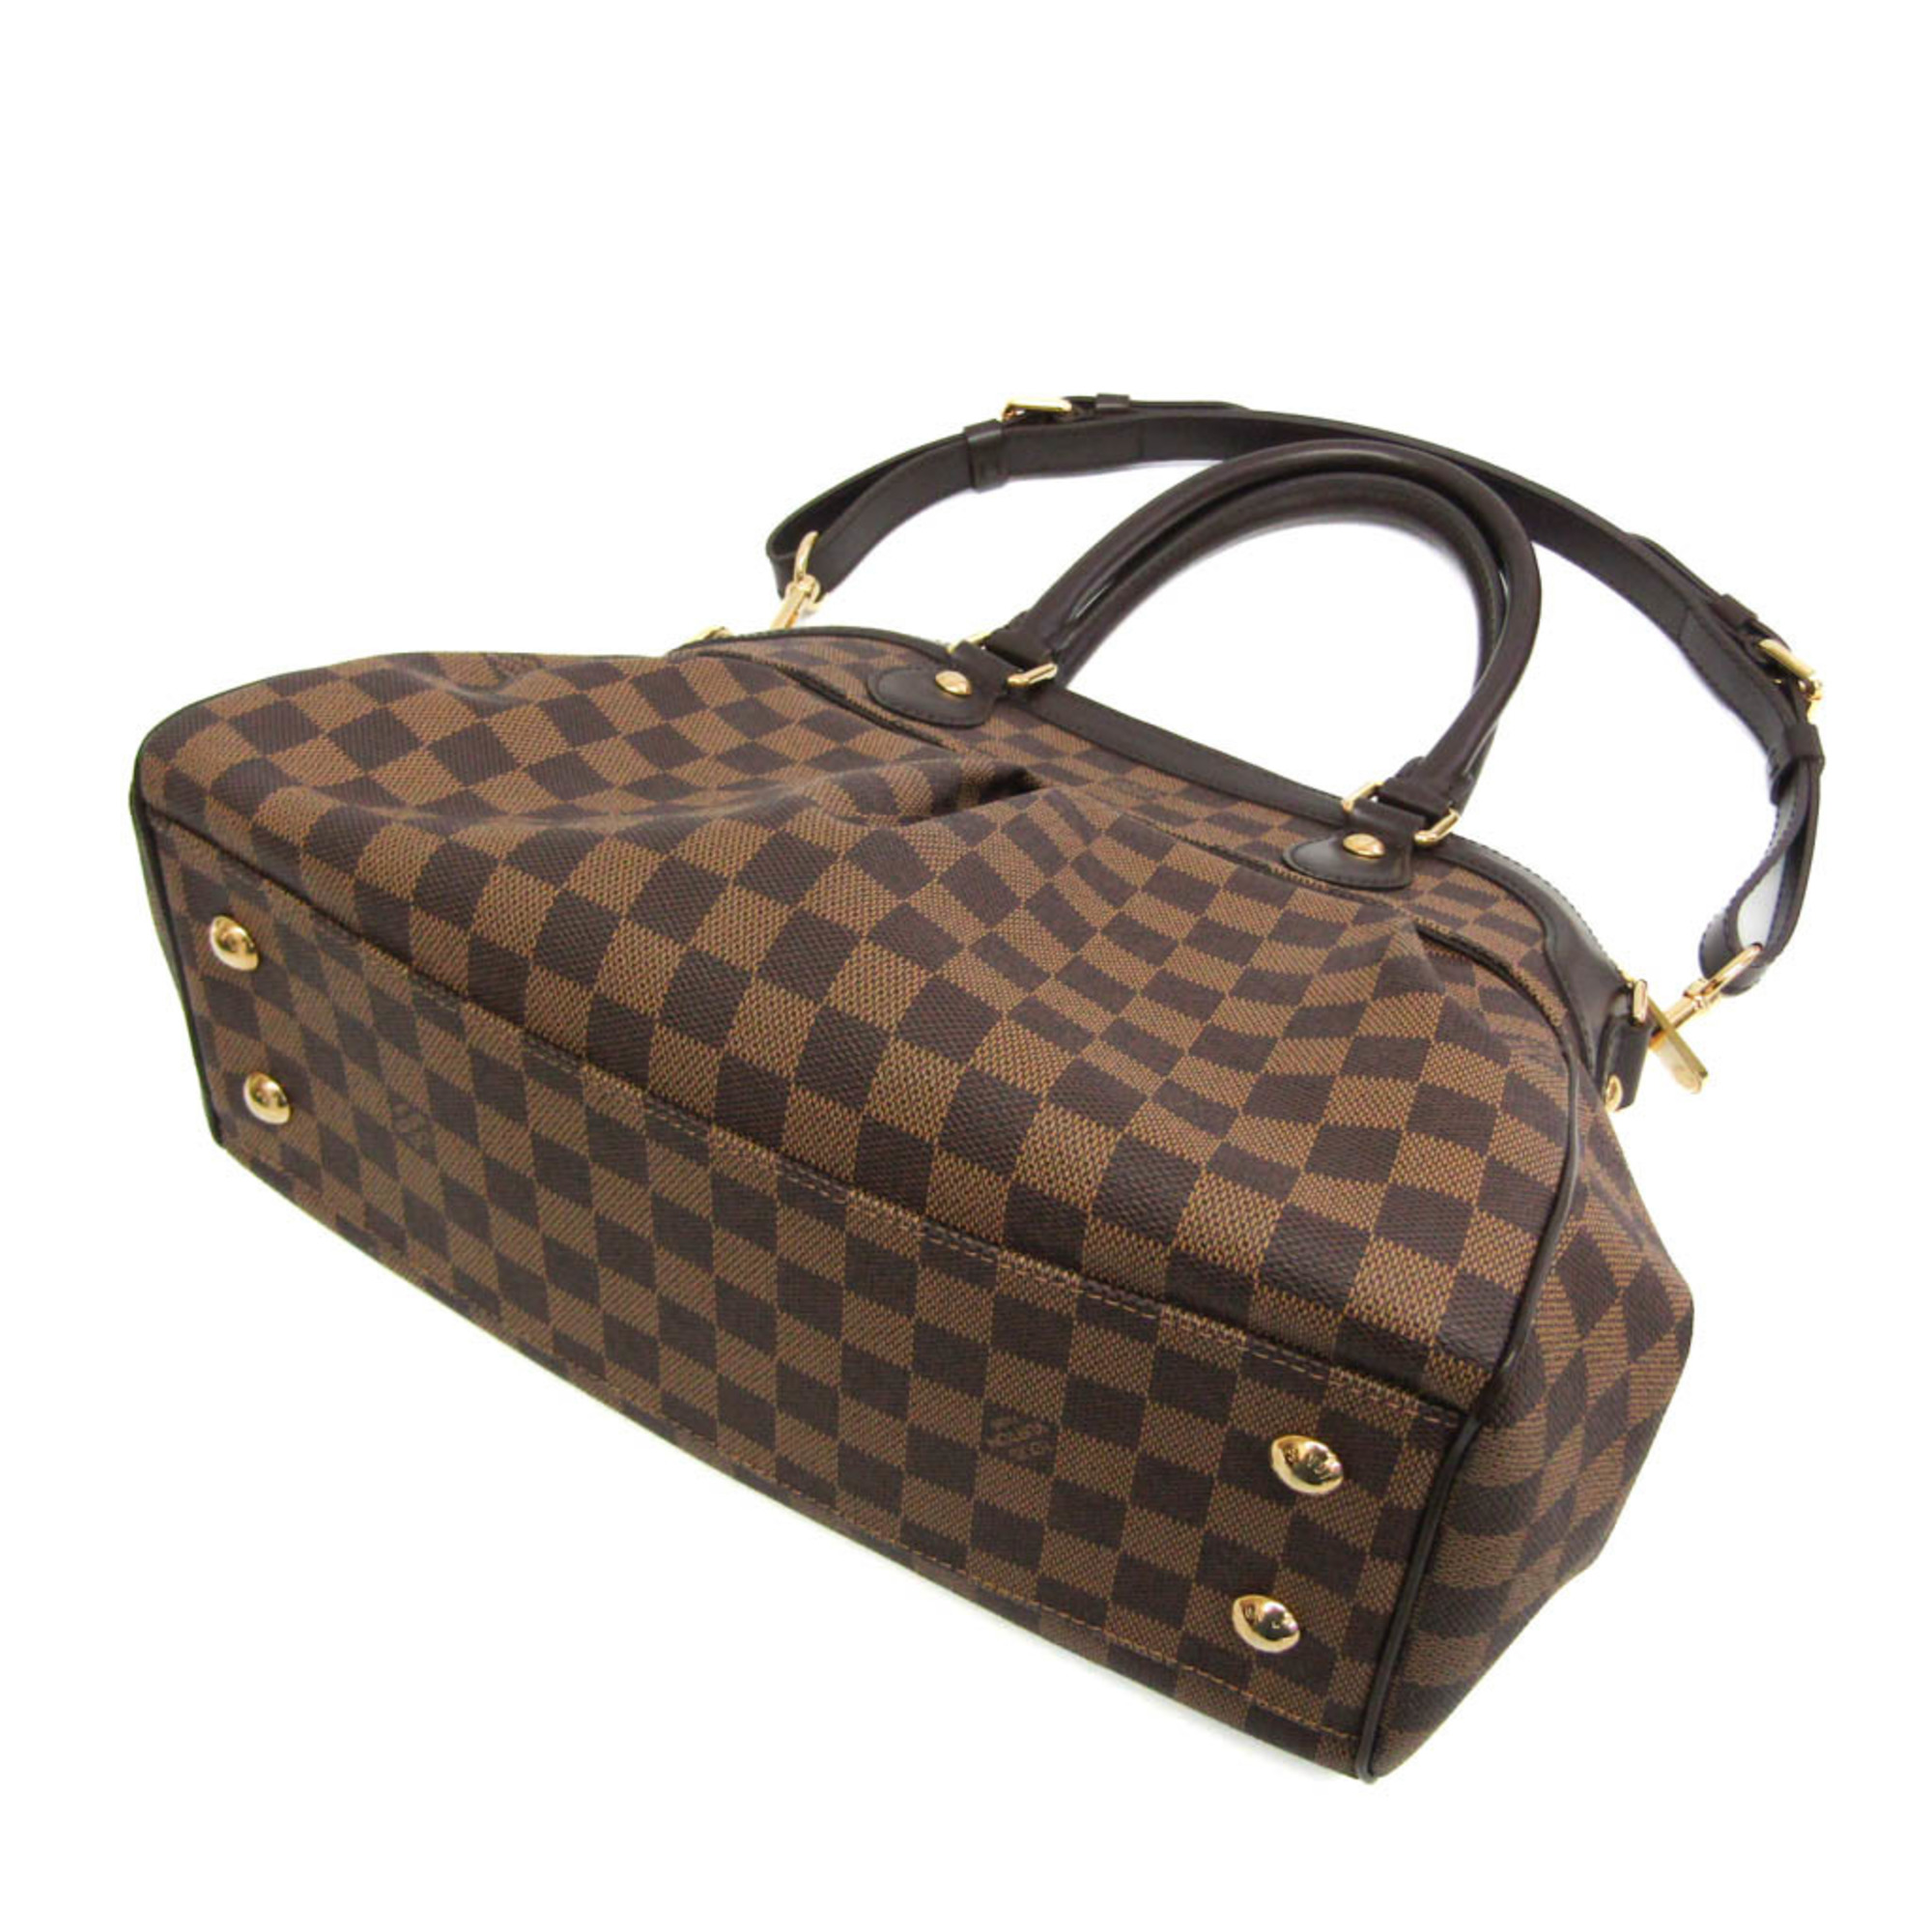 Louis Vuitton Damier Trevi PM N51997 Women's Shoulder Bag Ebene